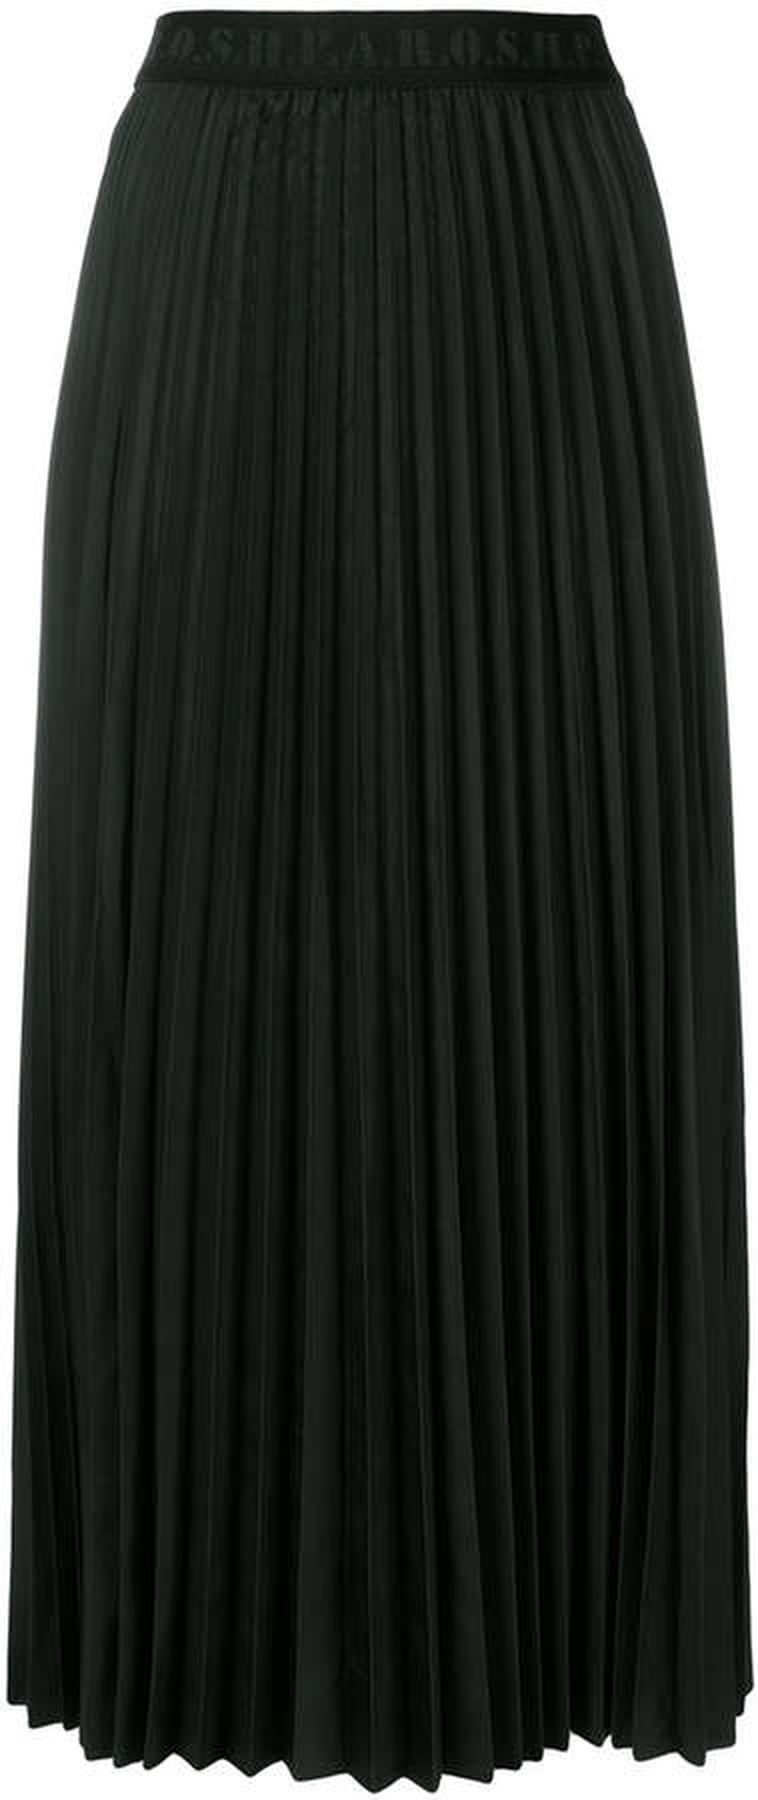 Victoria Beckham Wearing Black Pleated Midi Skirt | POPSUGAR Fashion